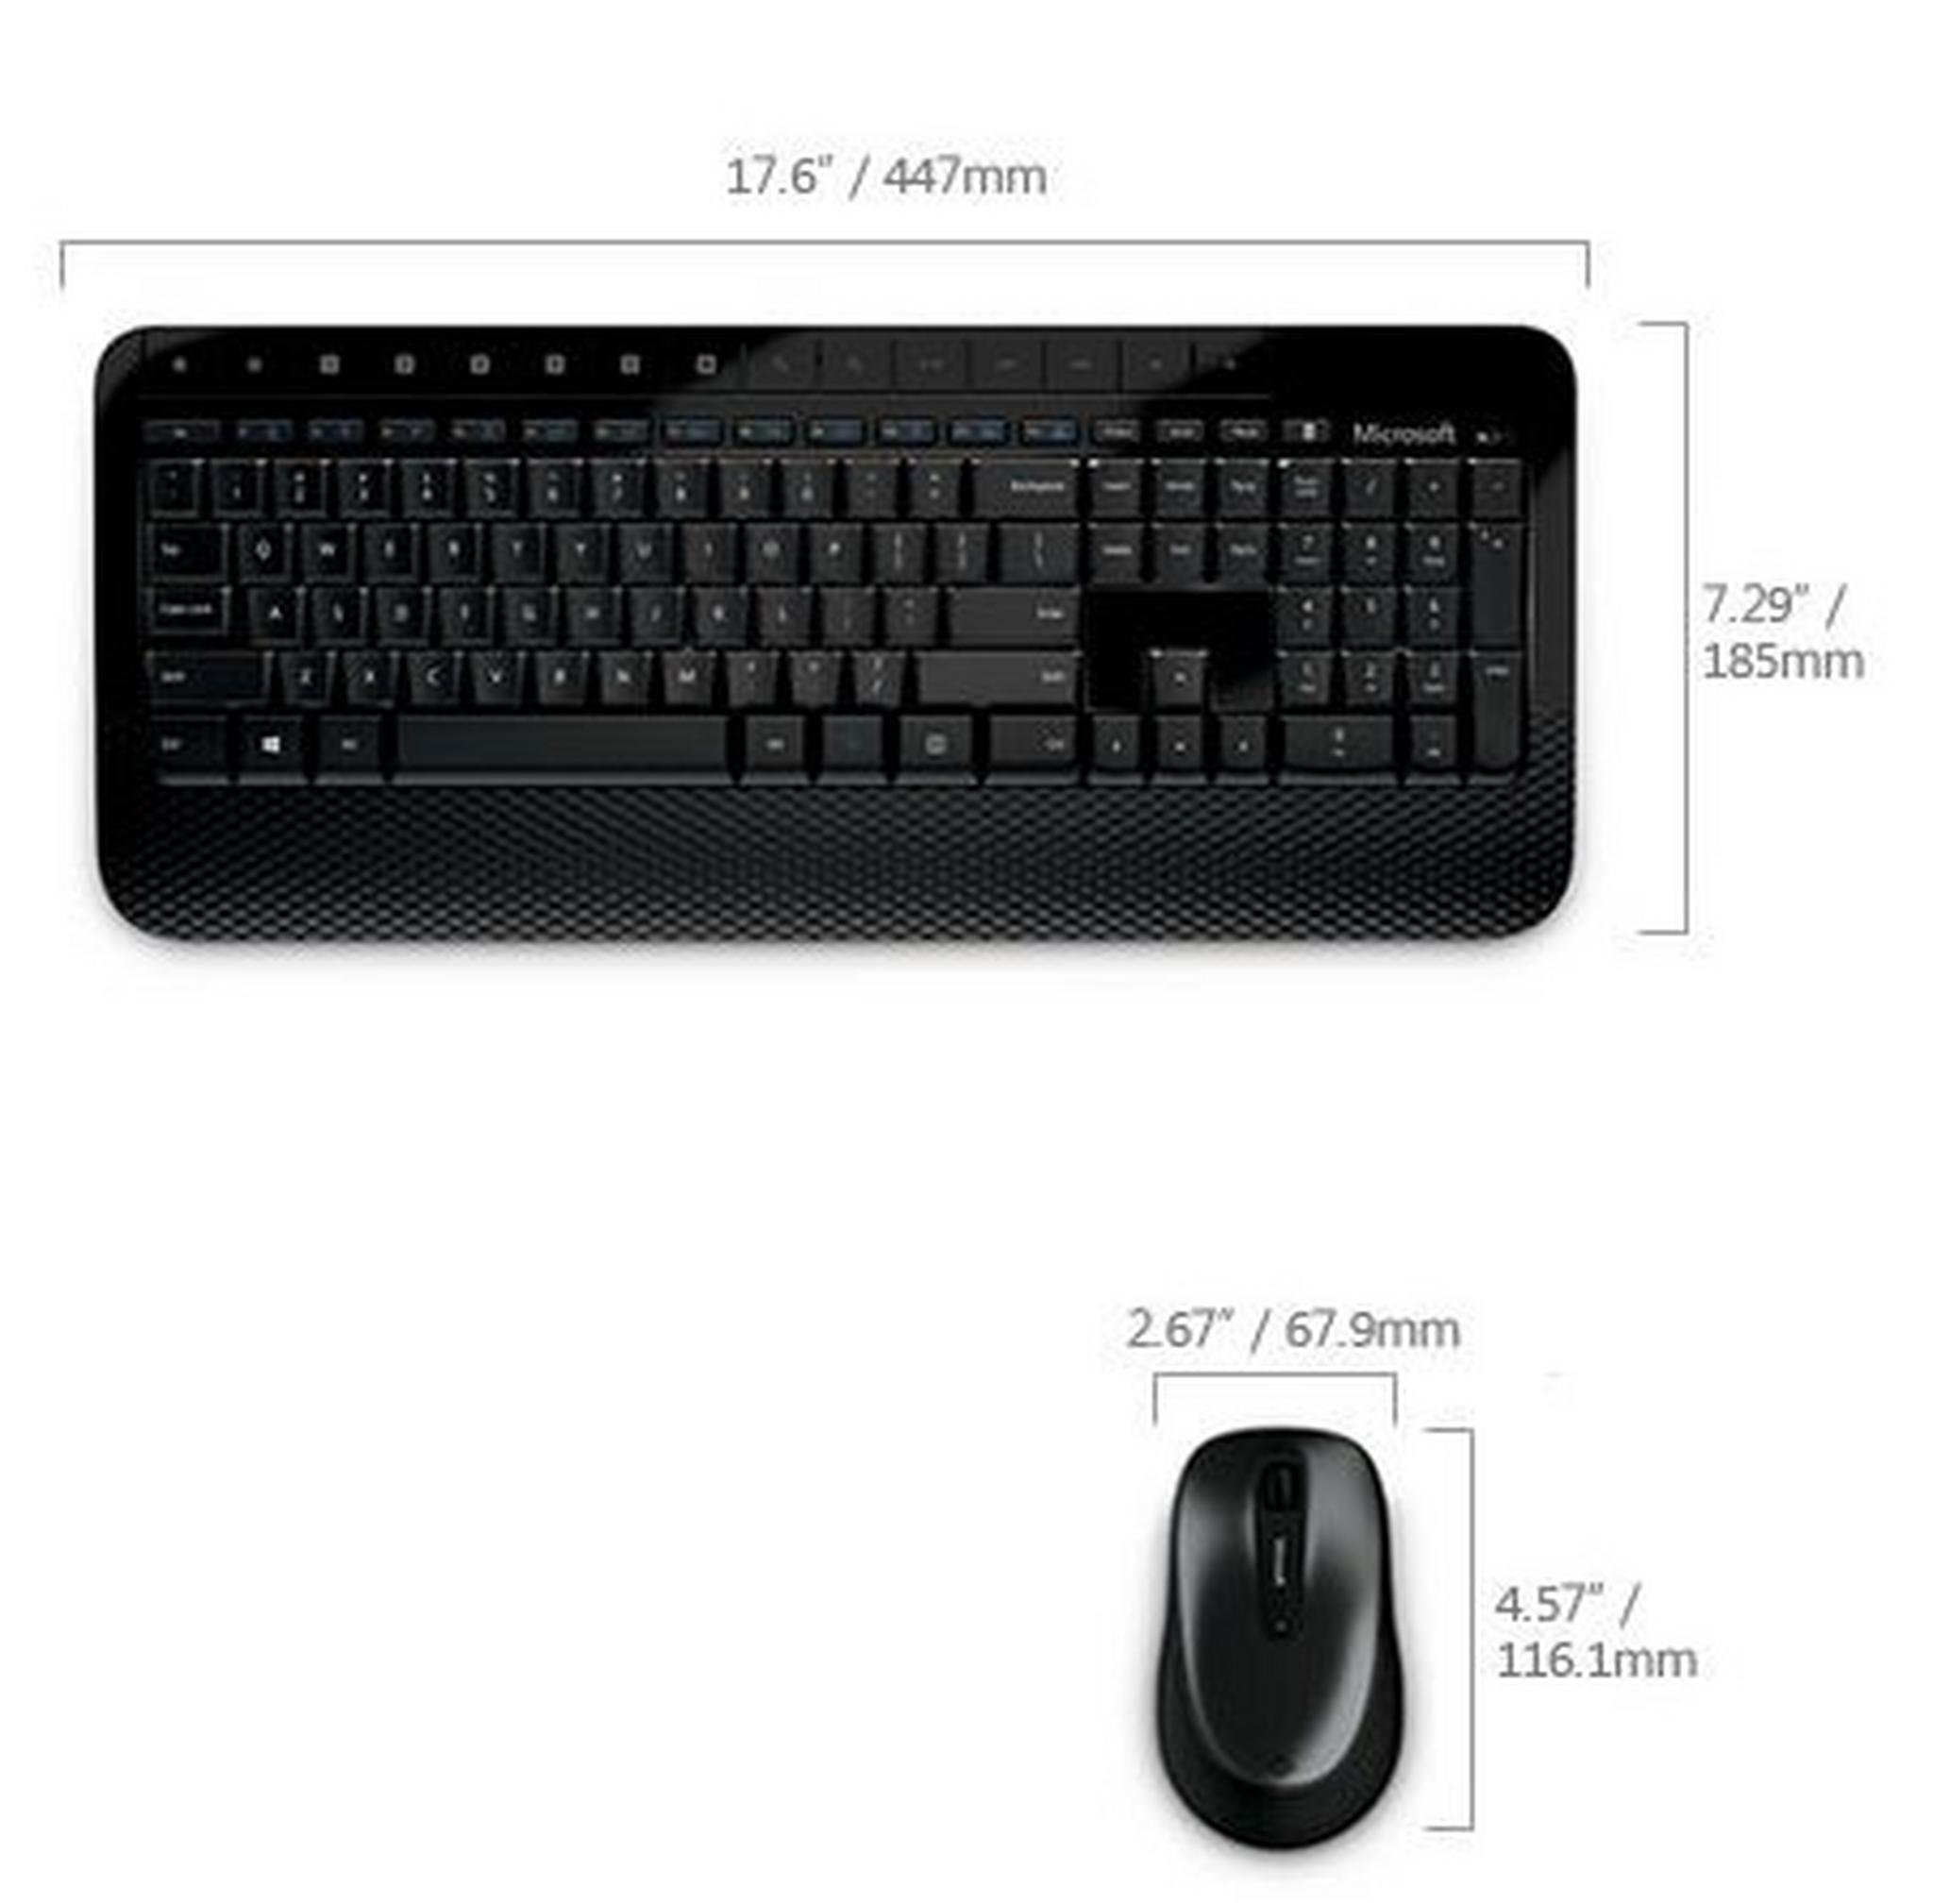 MICROSOFT Wireless Desktop 2000 Keyboard and Mouse (M7J-00028) Black